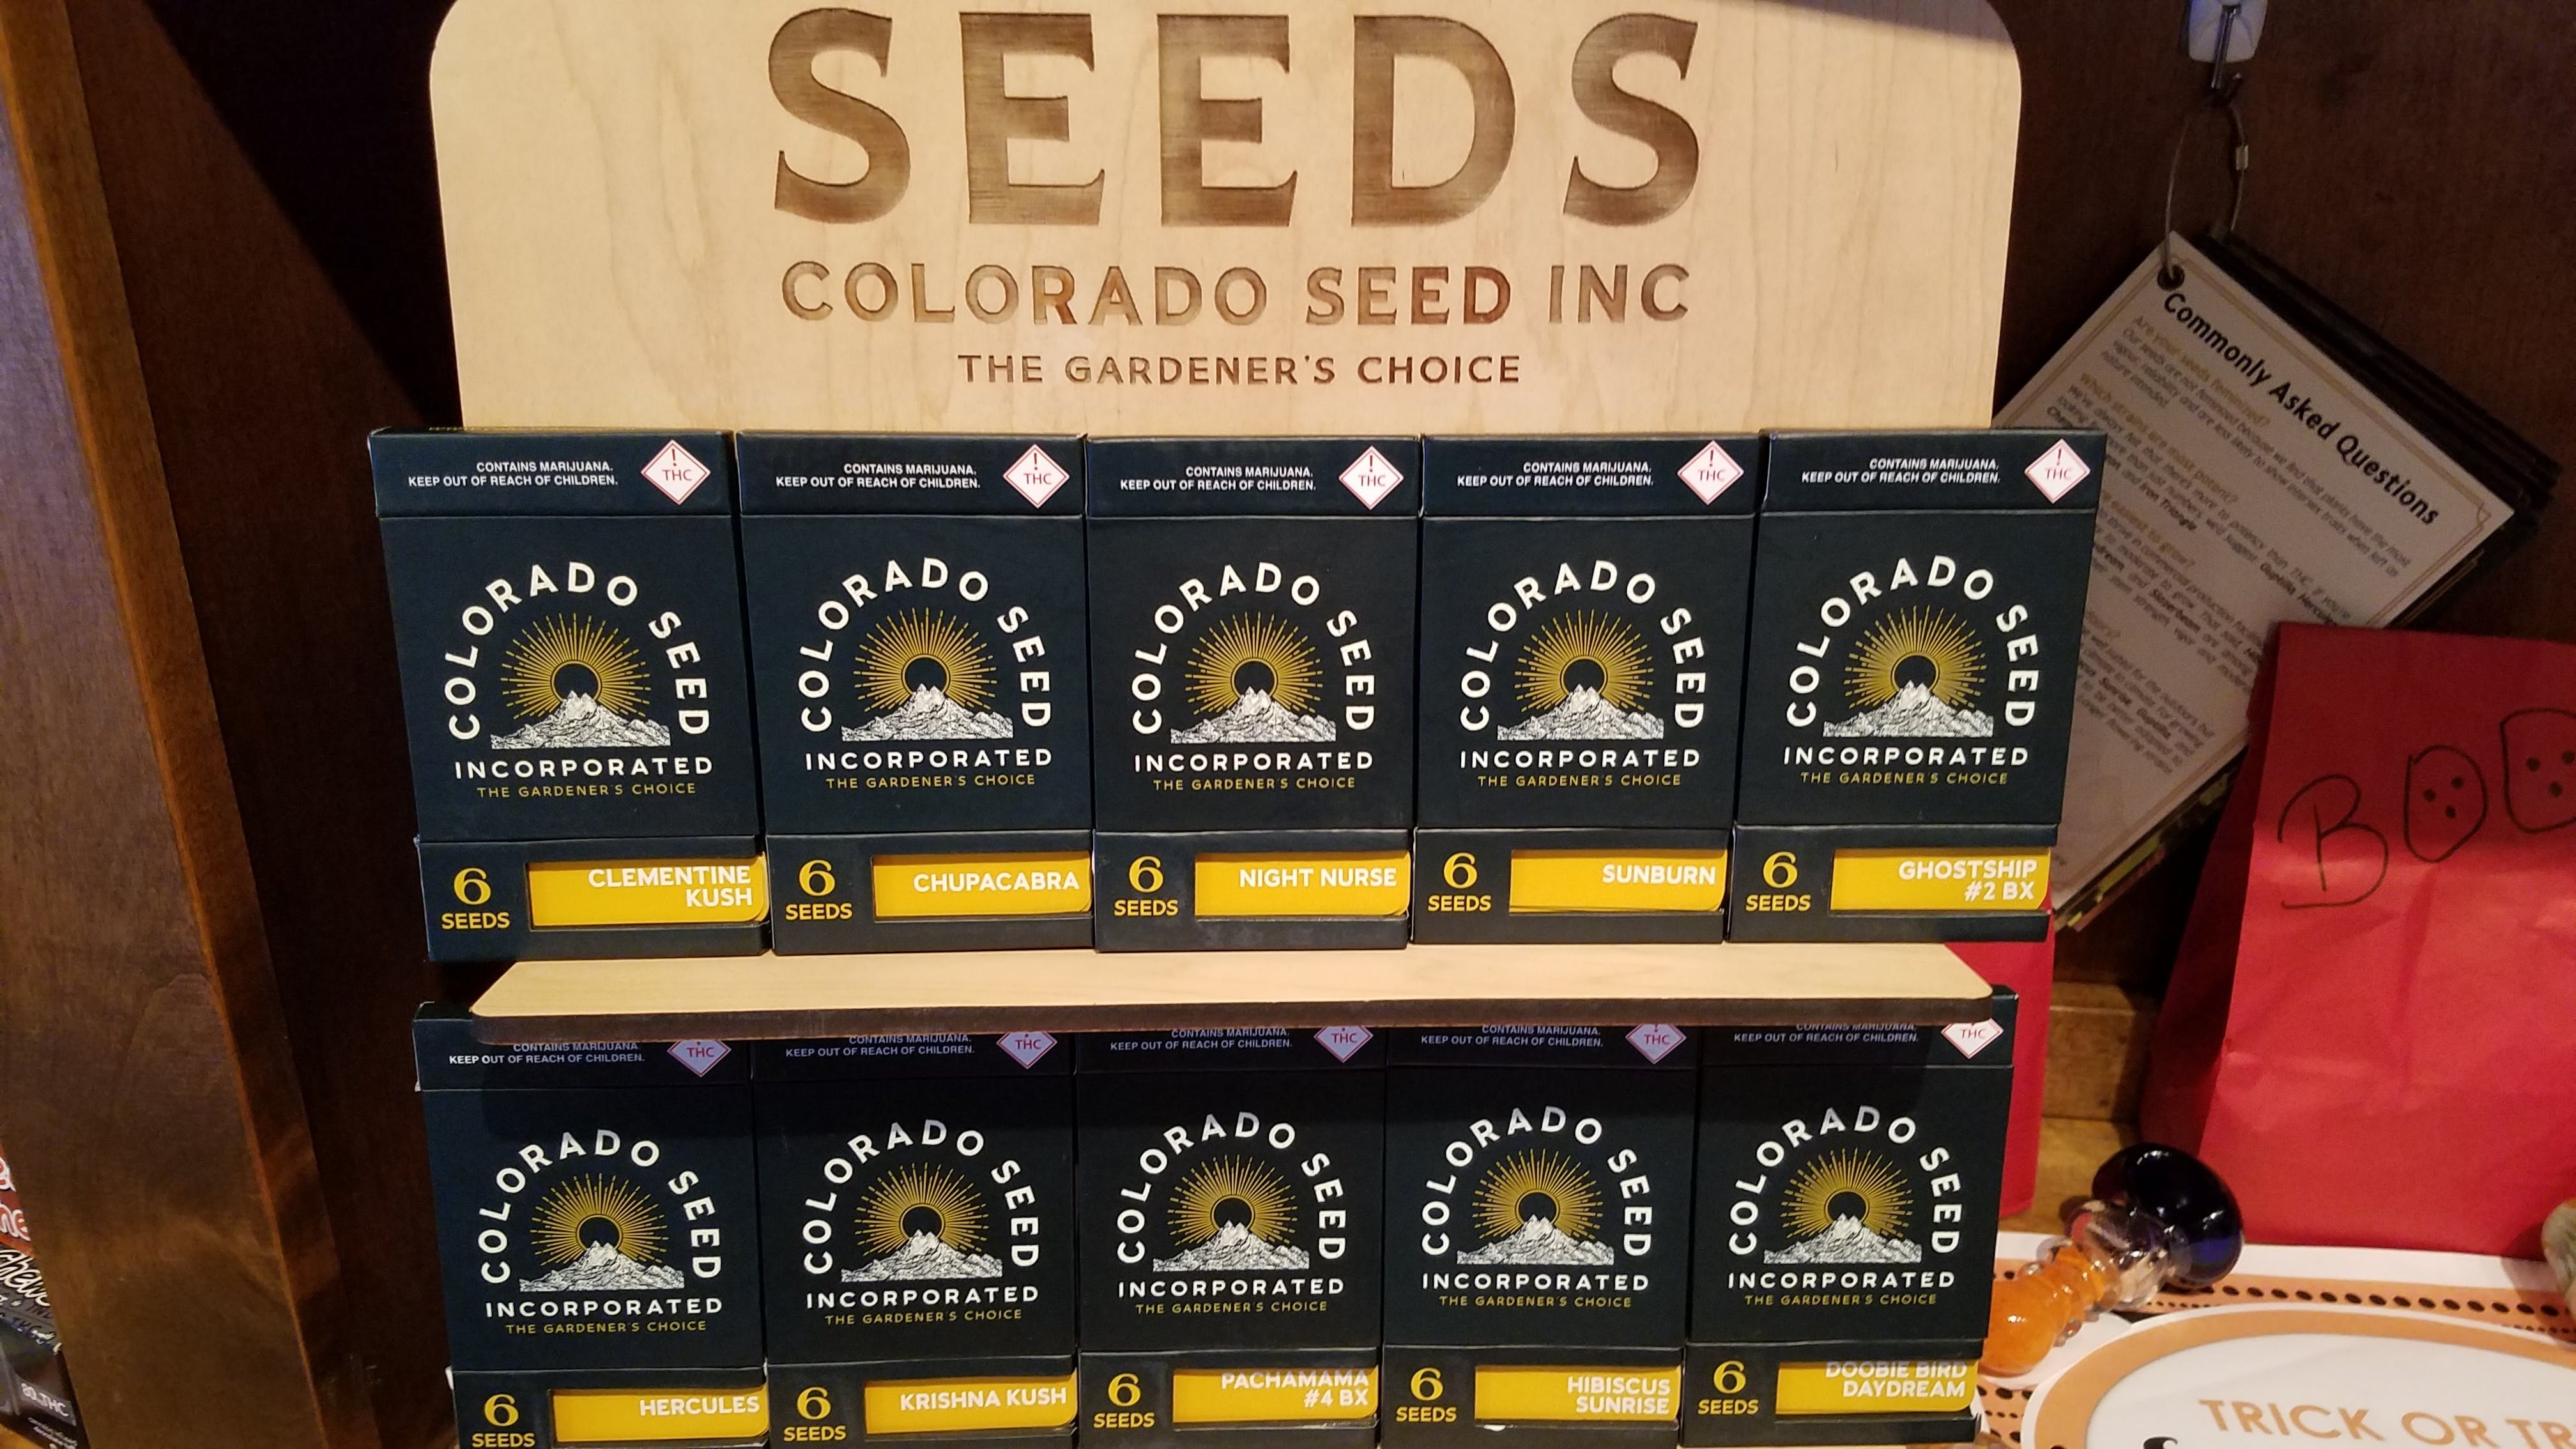 Colorado Seed Inc. Seeds